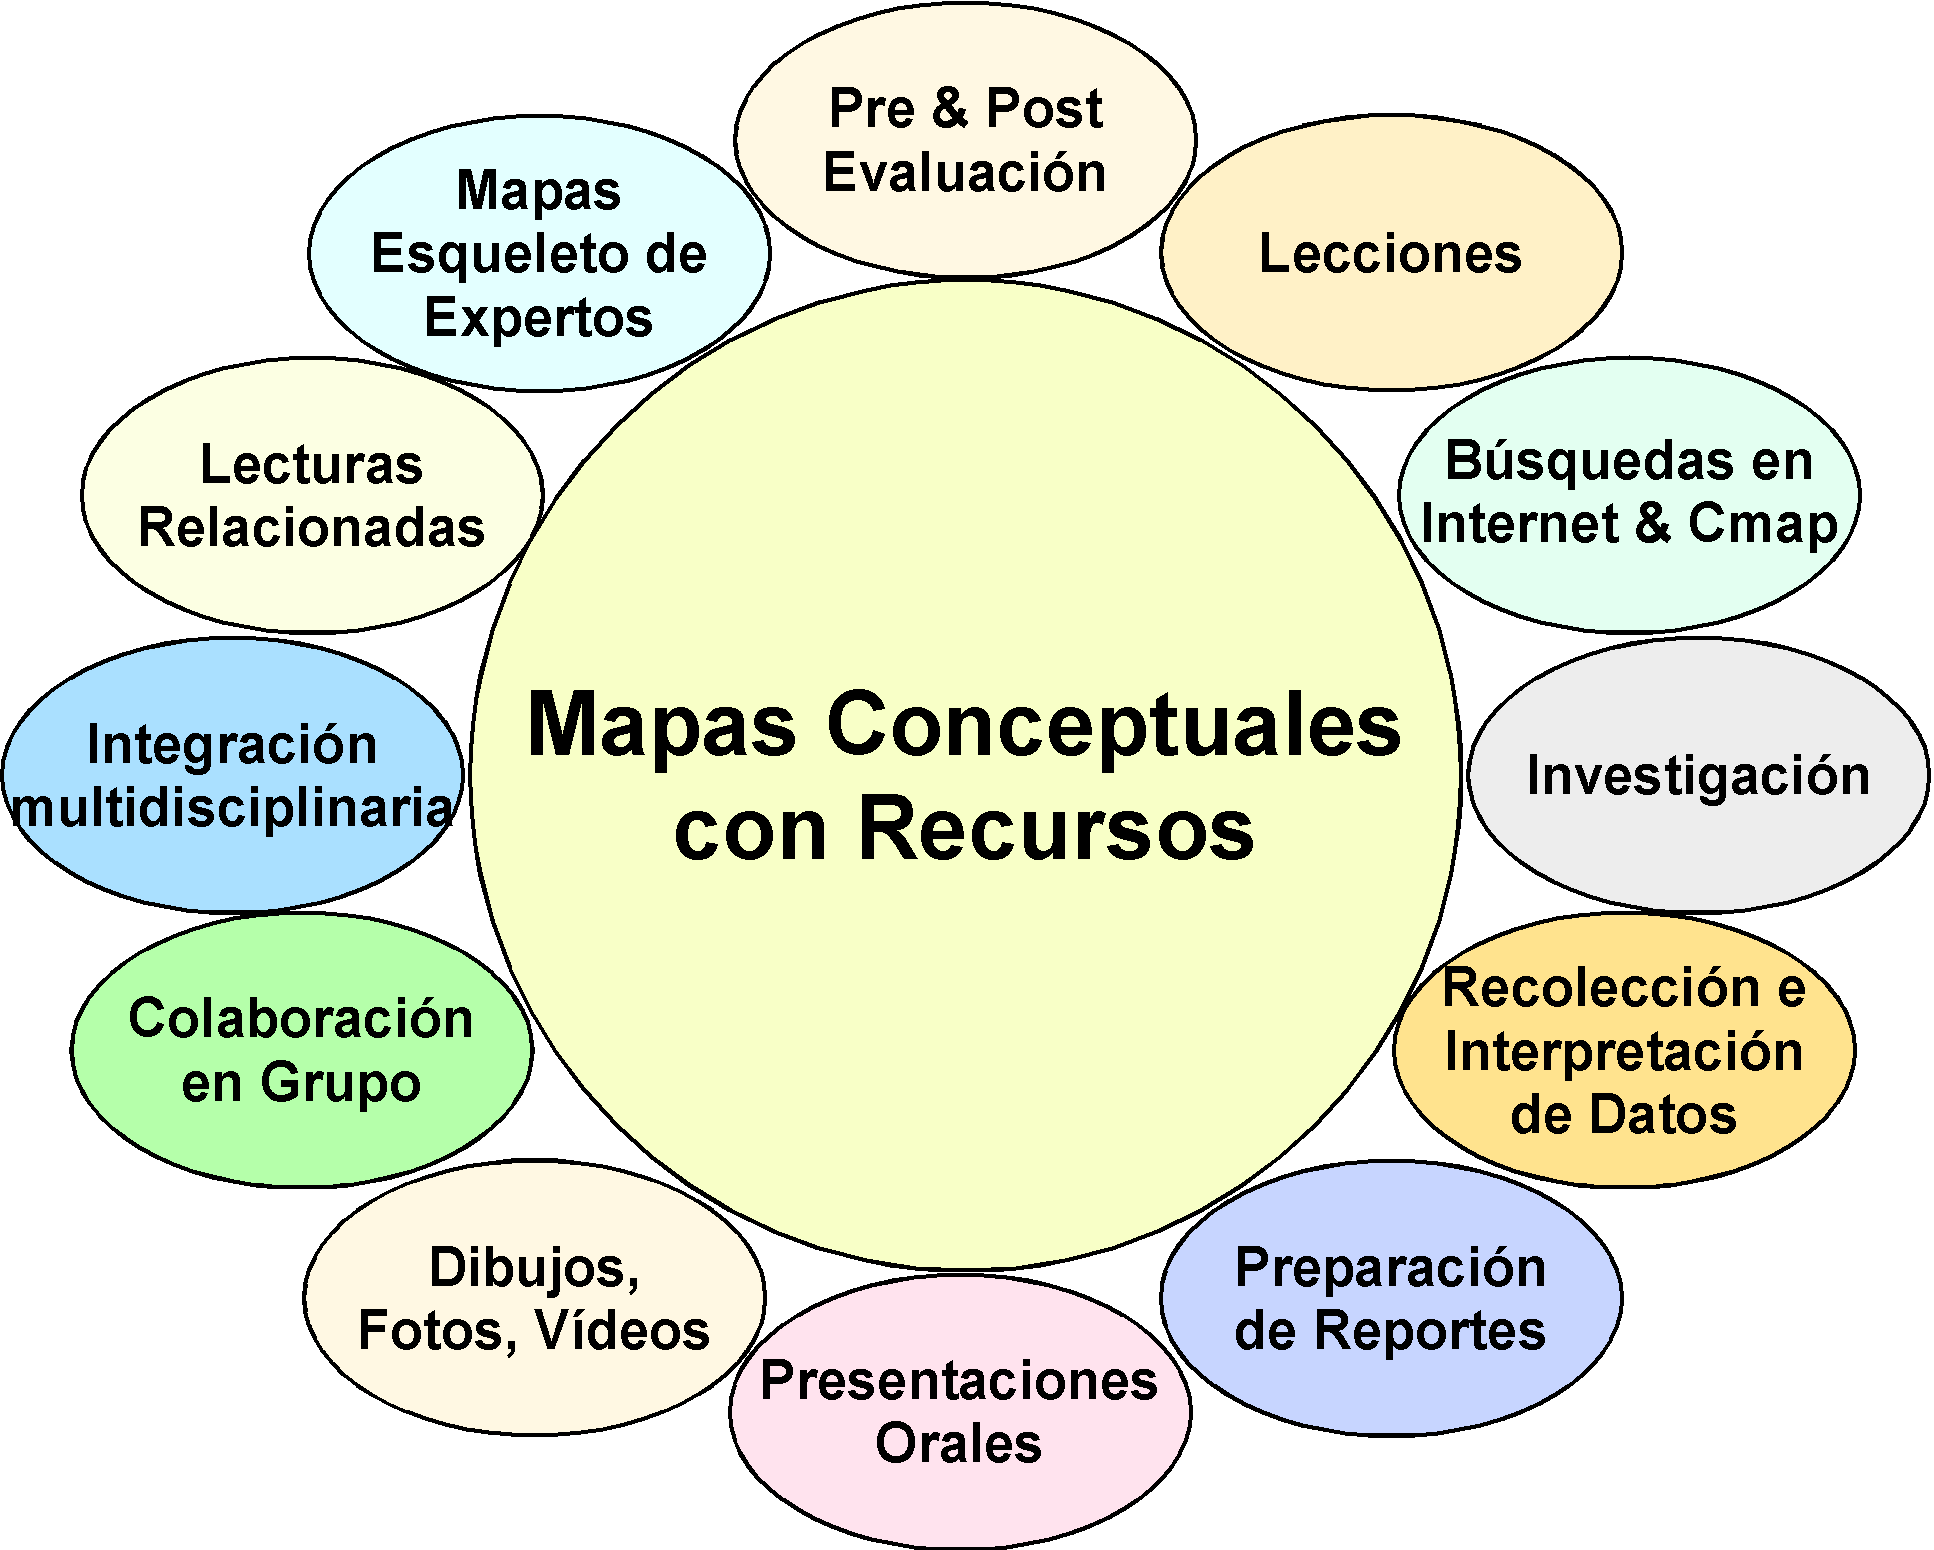 Mapa Conceptual Tecnicas de Estudio, PDF, Aprendizaje